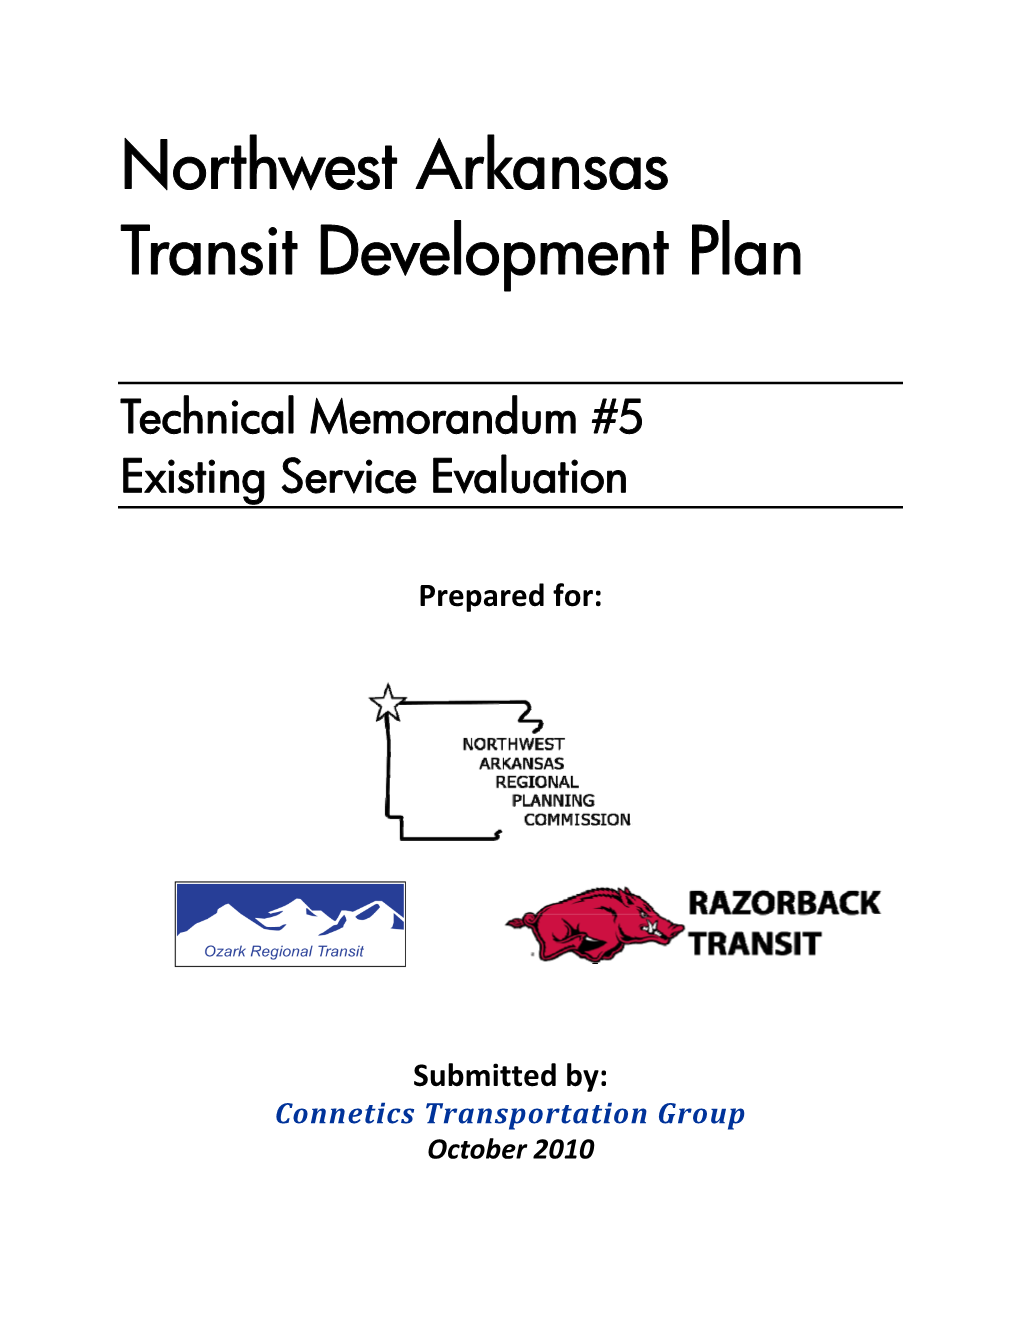 Northwest Arkansas Transit Development Plan